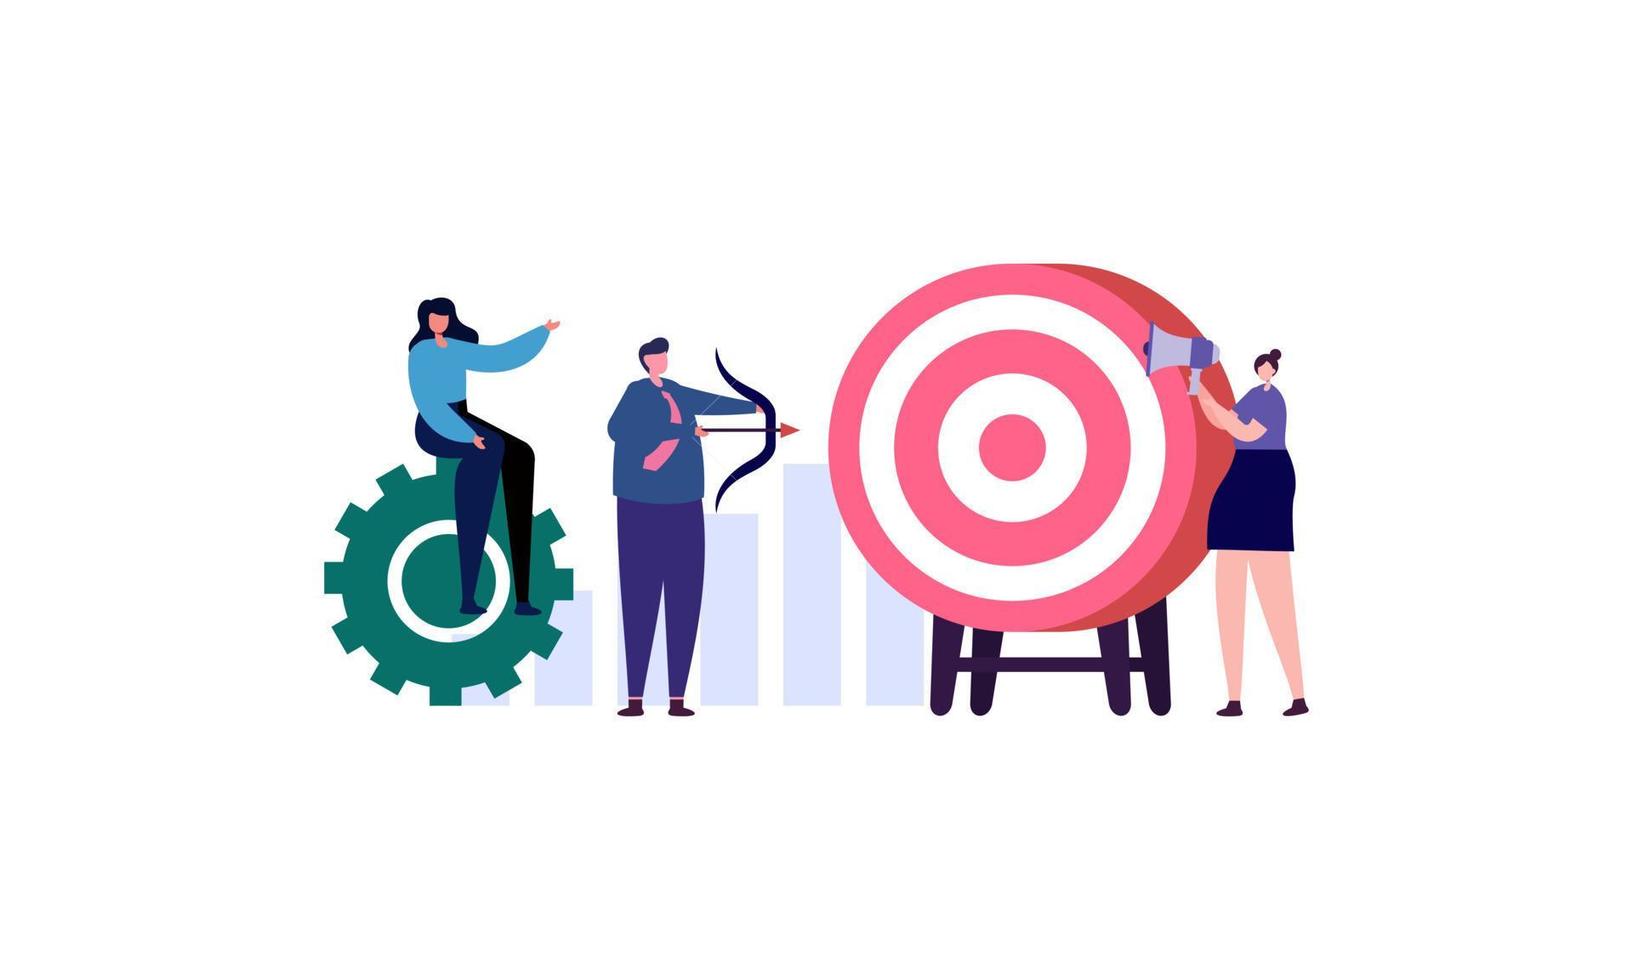 Business team goals concept illustration vector